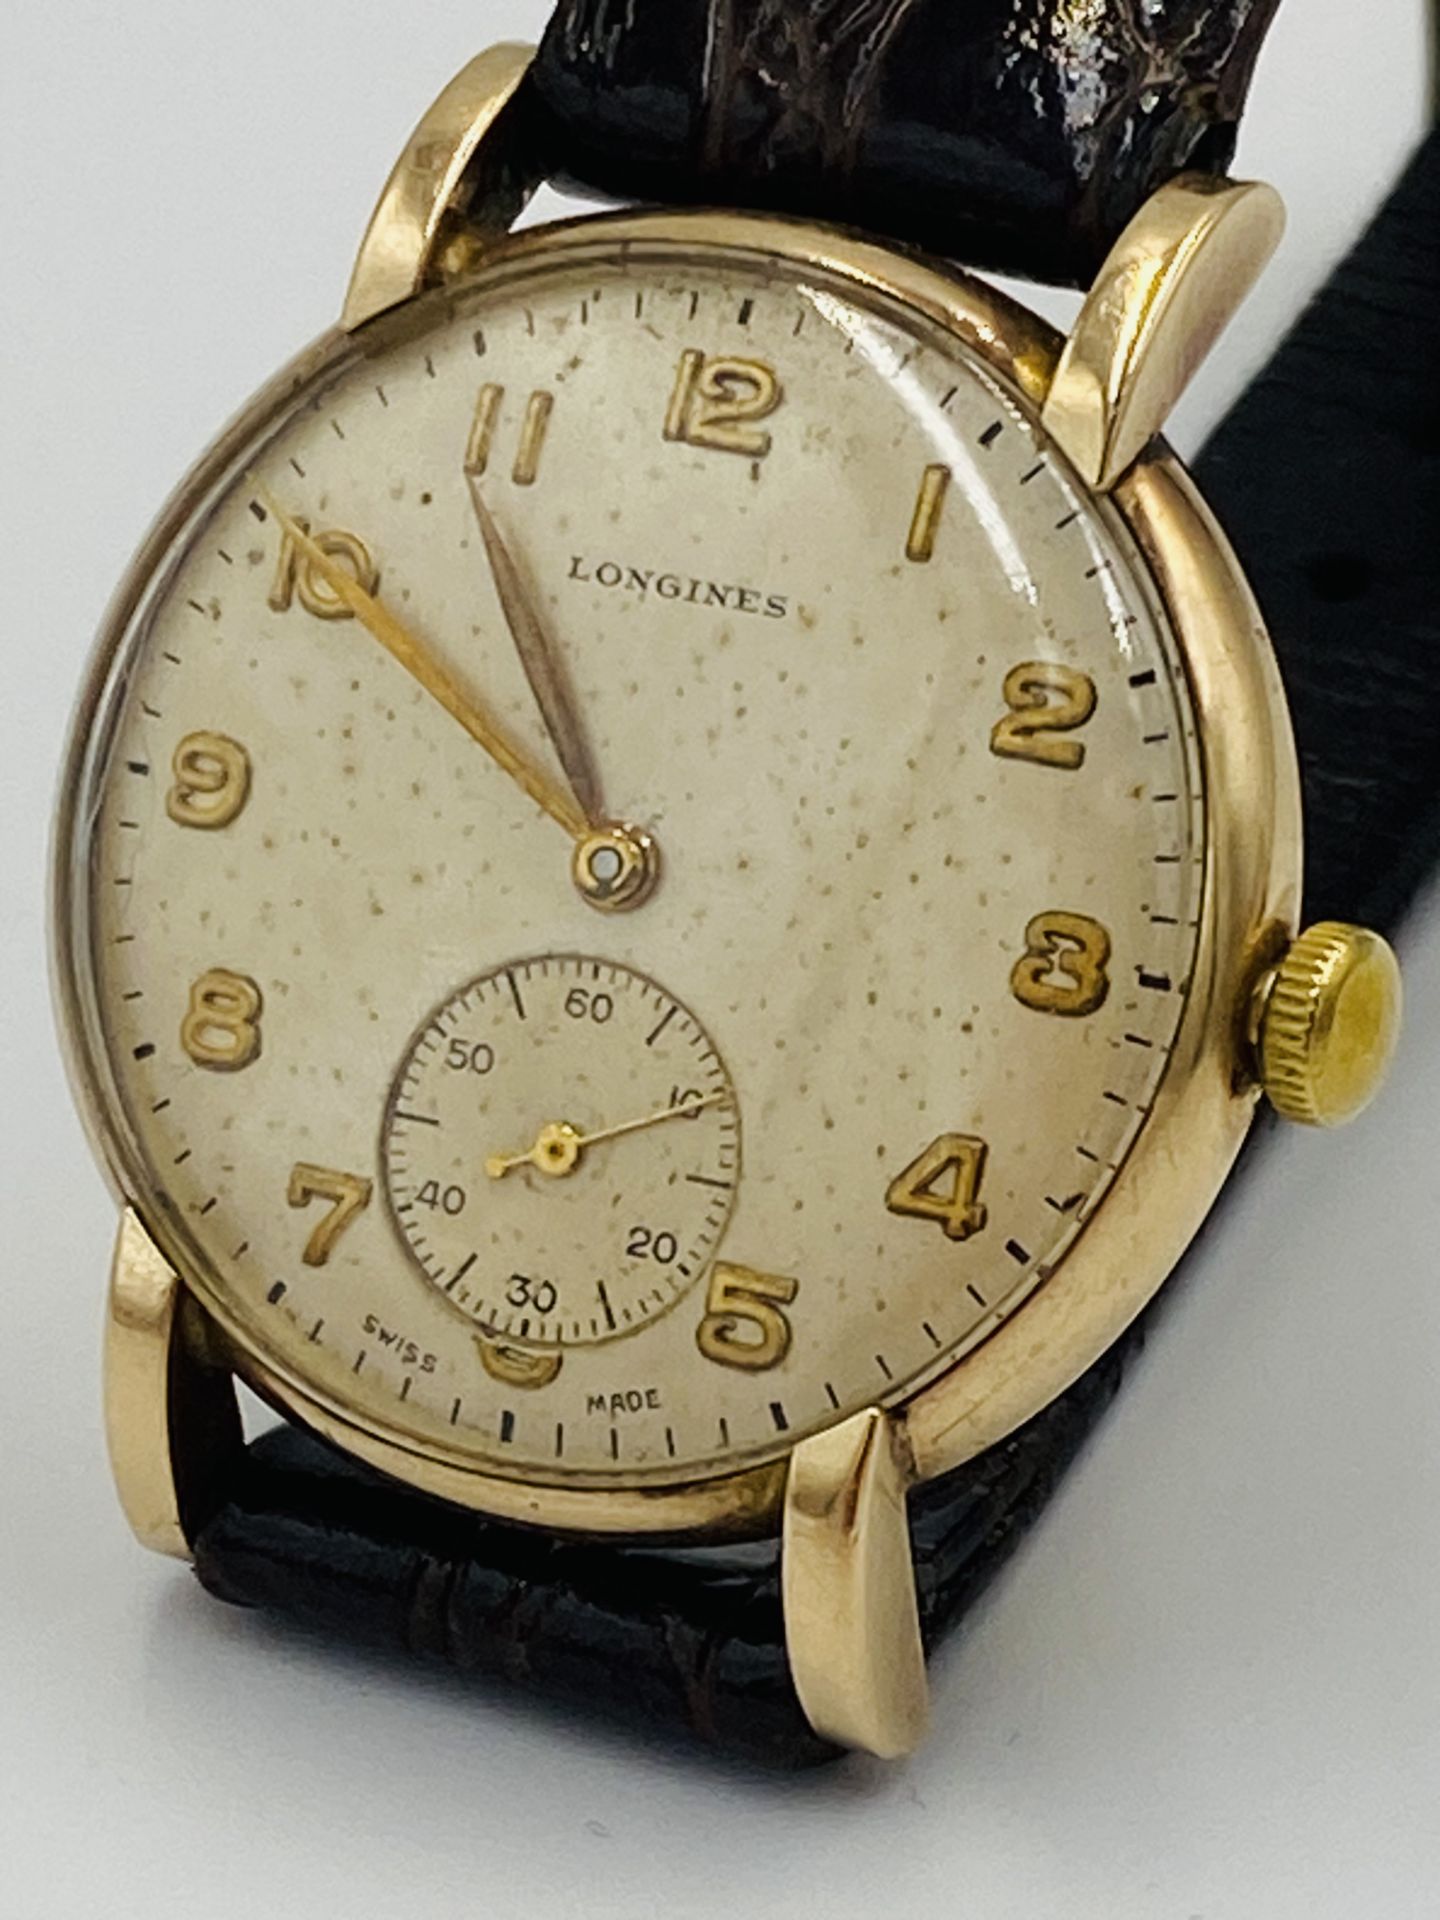 Gentlemans Longines 17 jewel manual wind wristwatch, in 9ct gold case - Image 5 of 5